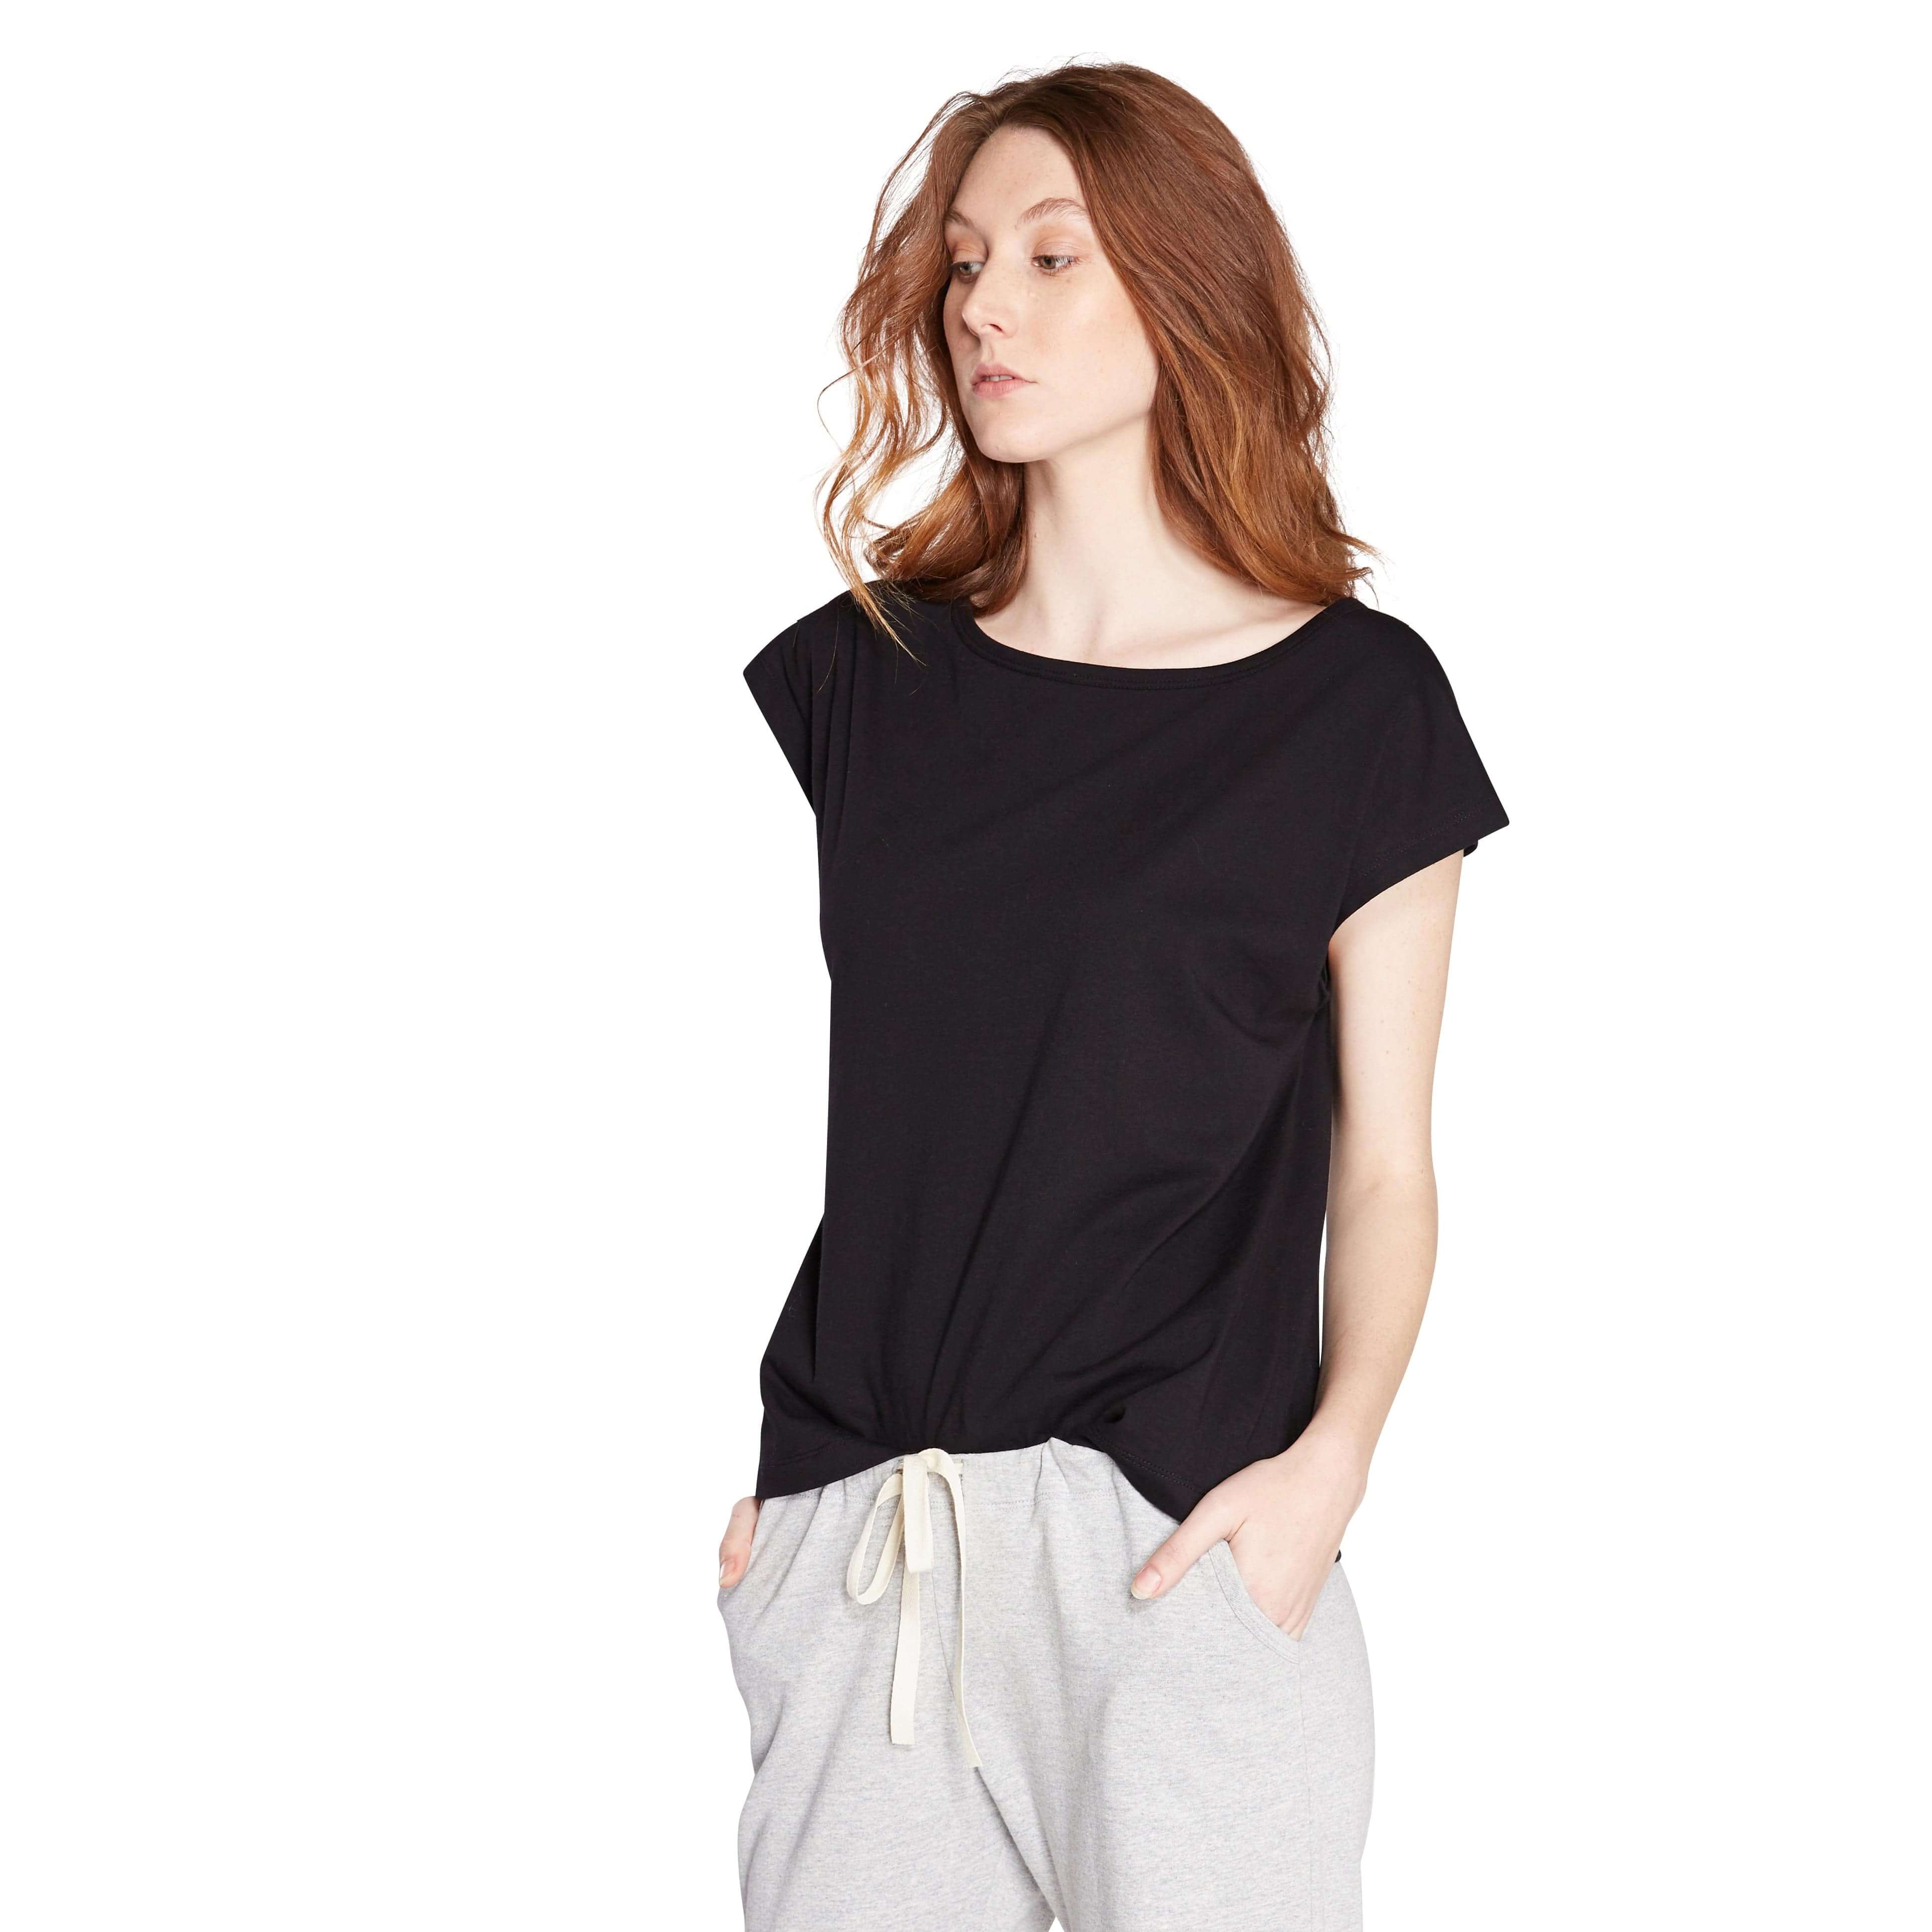 Women's 2 in 1 Built-in Bra Long-Sleeved Women T-Shirts Leisure Woman T  Shirt for Female Tops Tees,Black-Medium